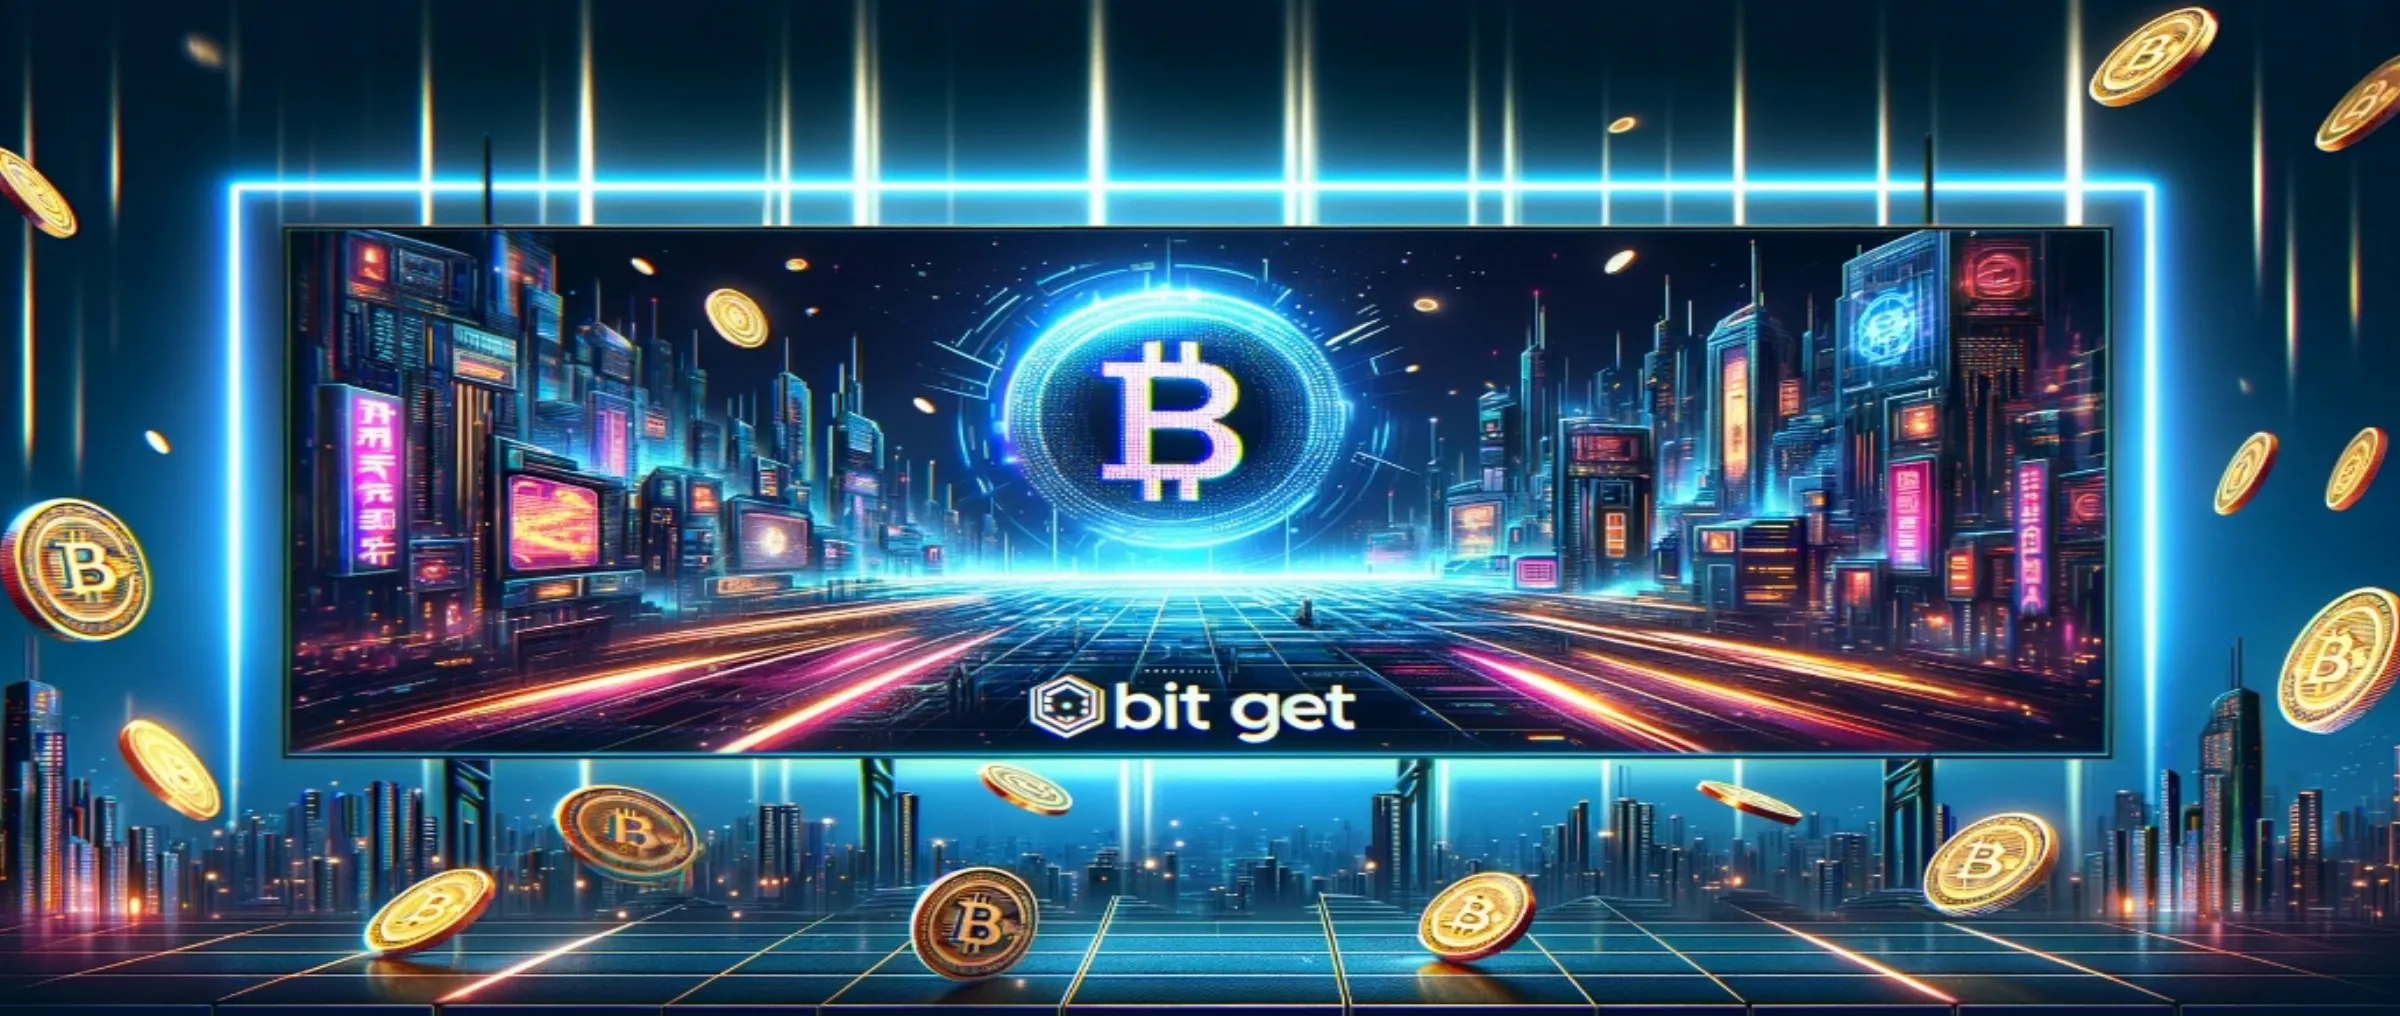 Bitget is distributing 50 million BWB tokens